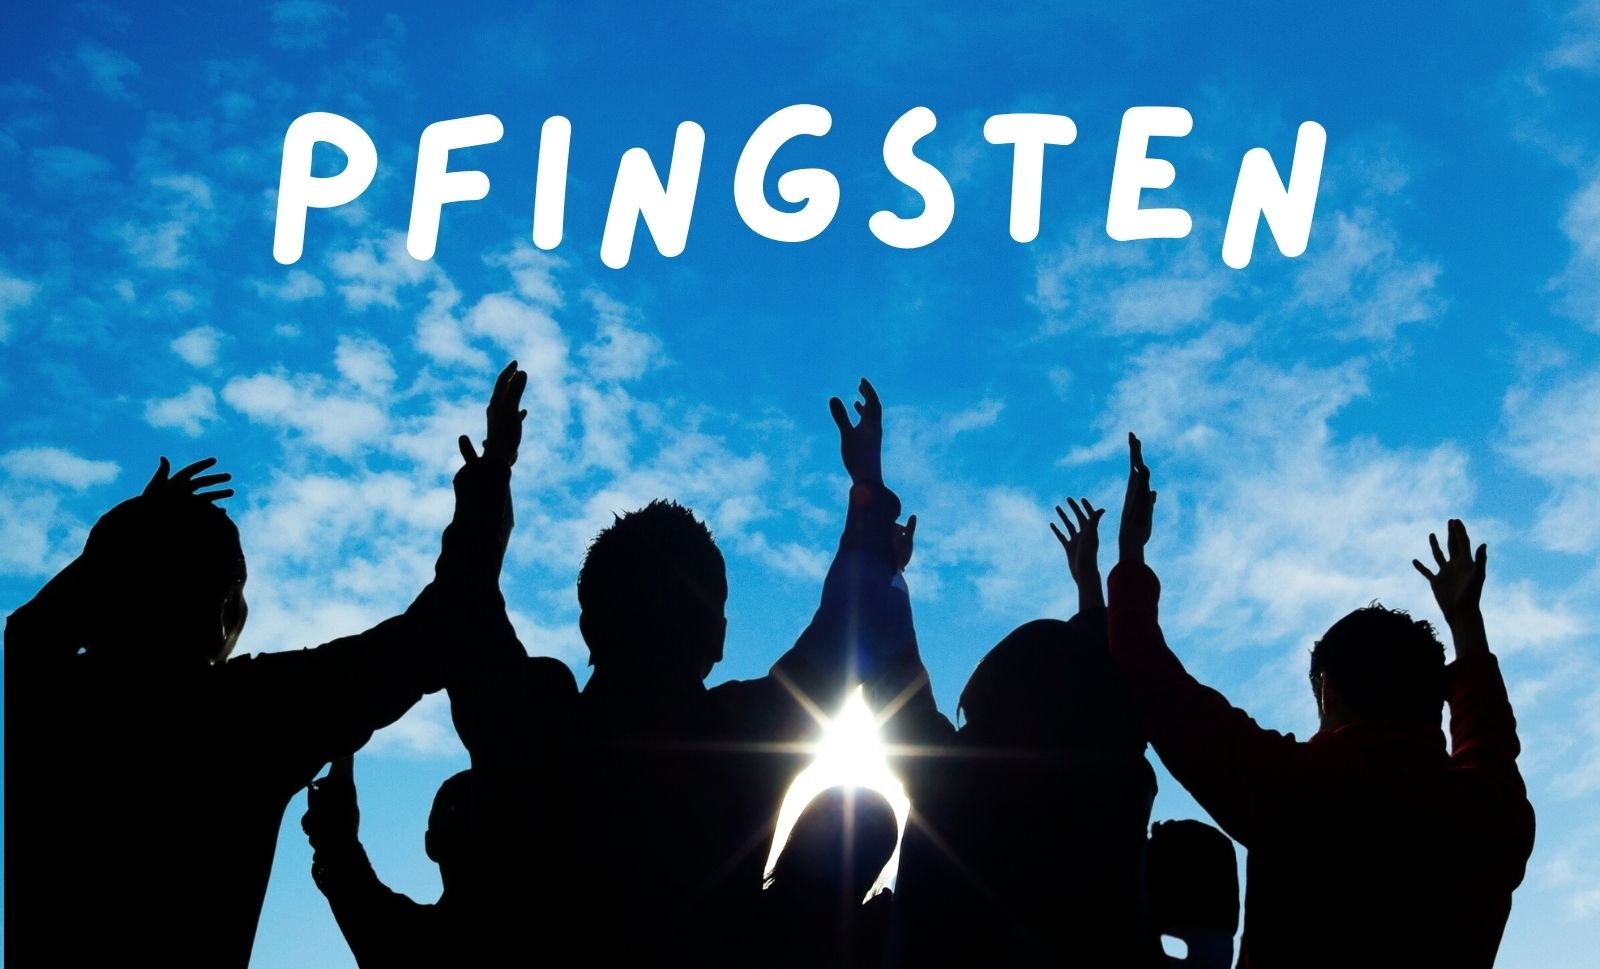 Pfingsten 2022 (1600 × 969 px) (c) canva.com